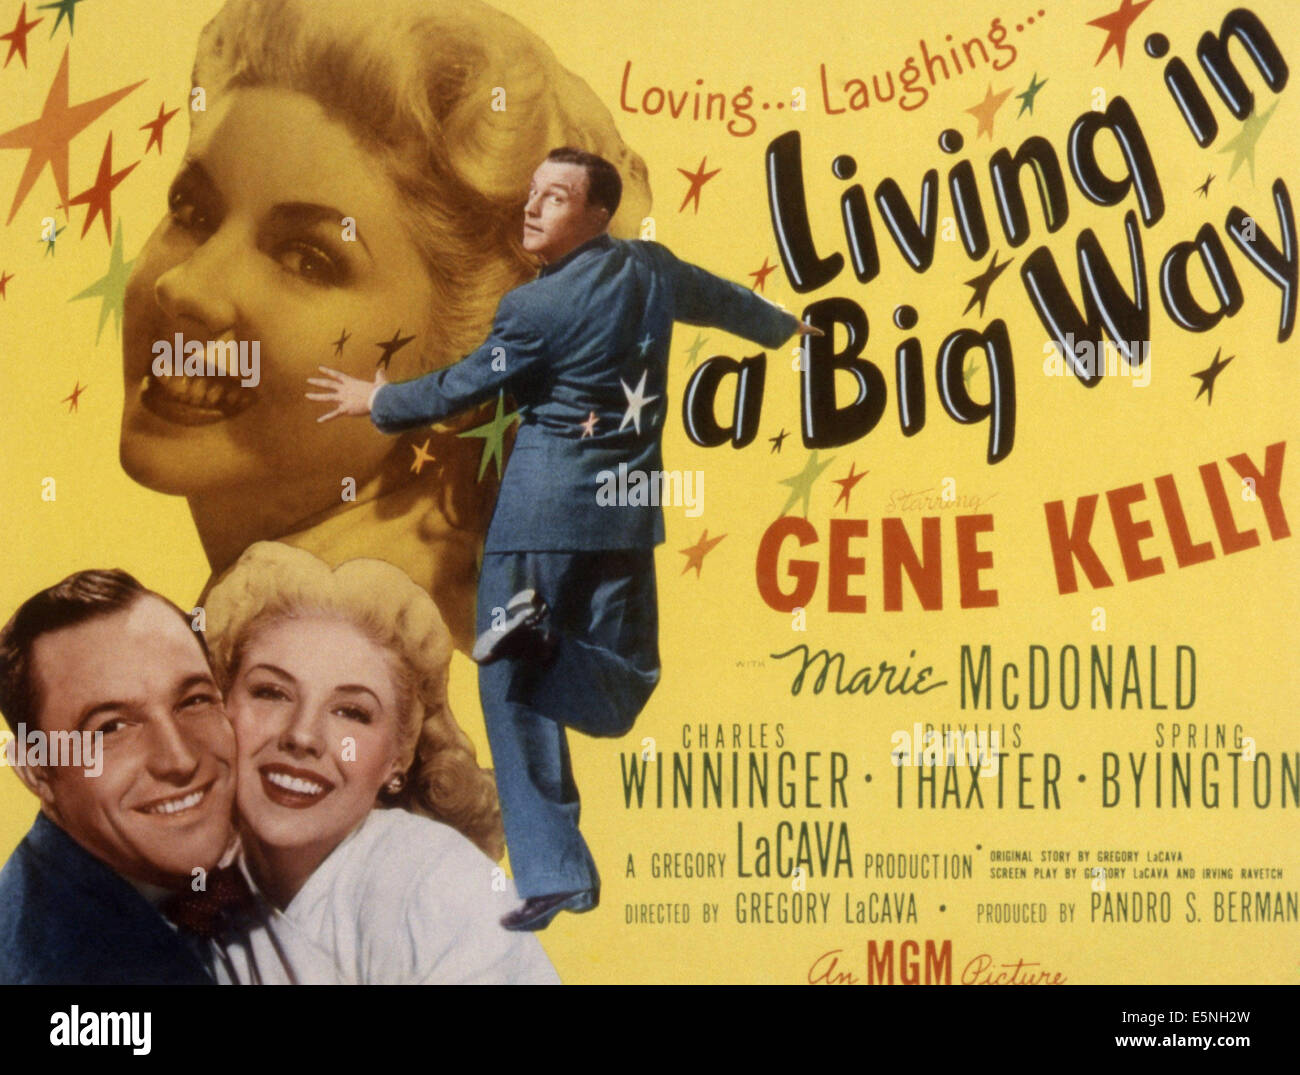 LIVING IN A BIG WAY, Gene Kelly, Marie McDonald, 1947 Stock Photo